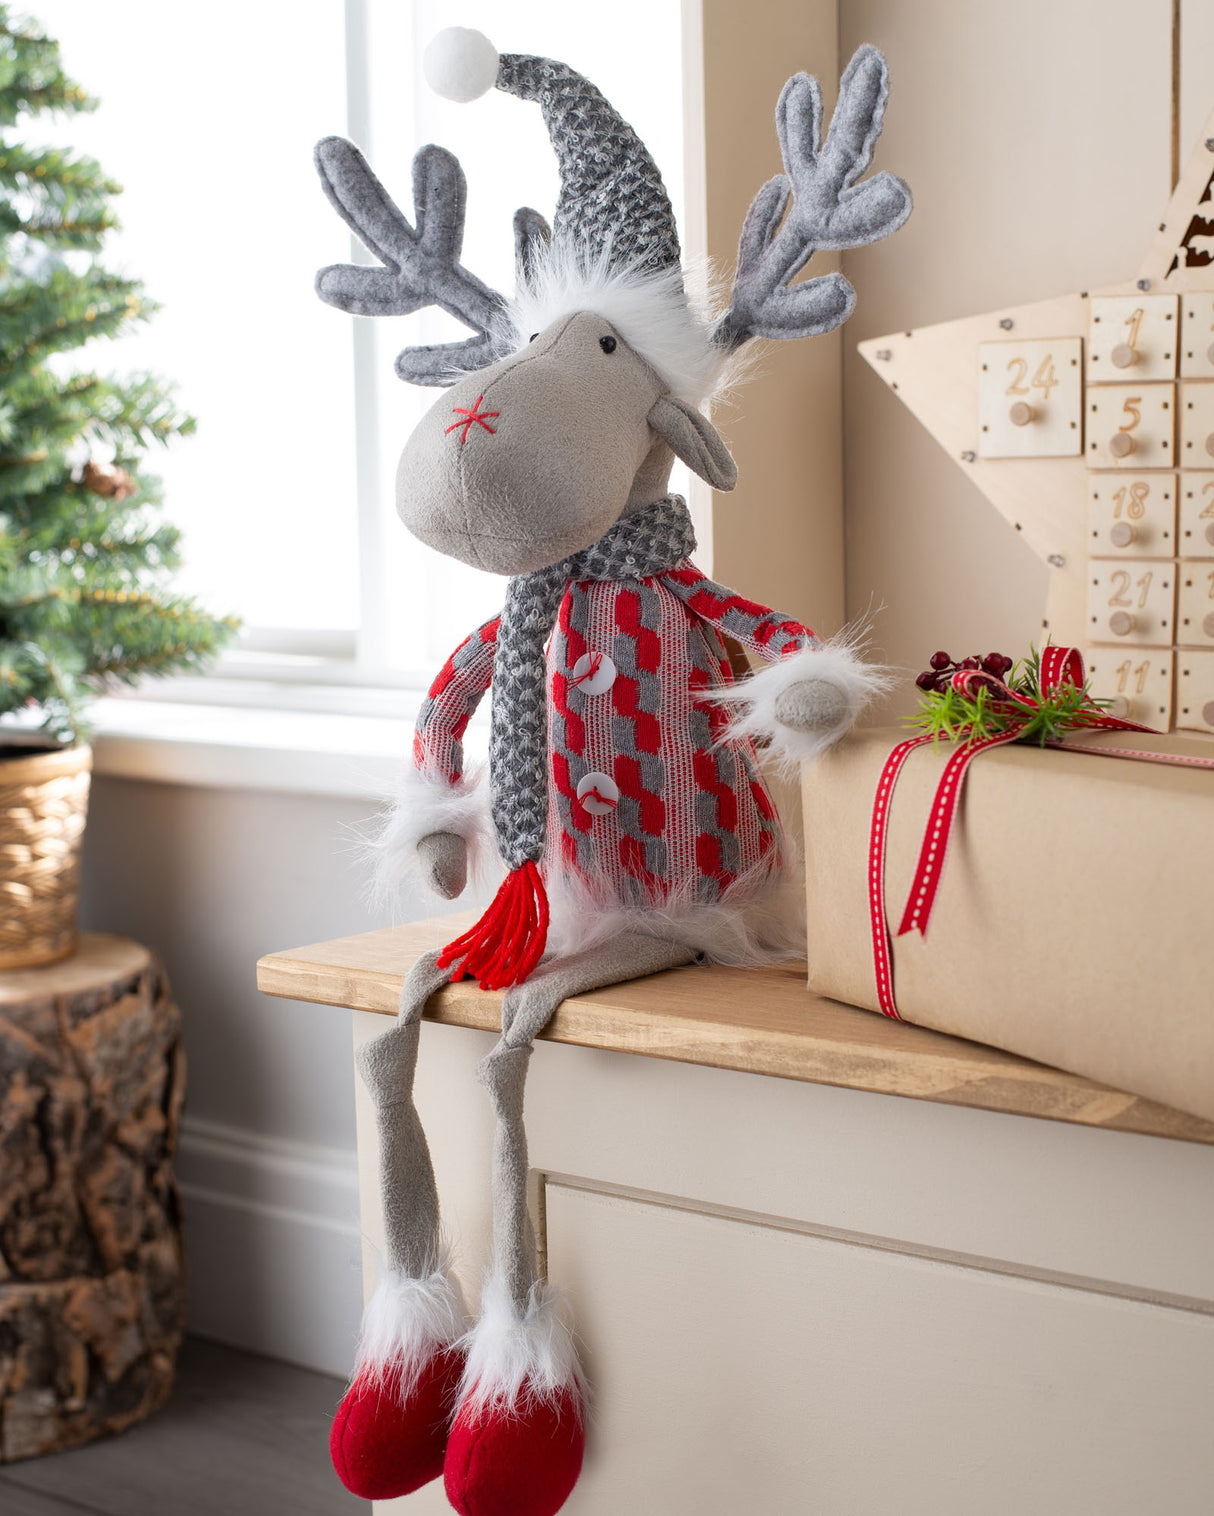 Sitting Reindeer Figurine, Red and Grey, 58 cm